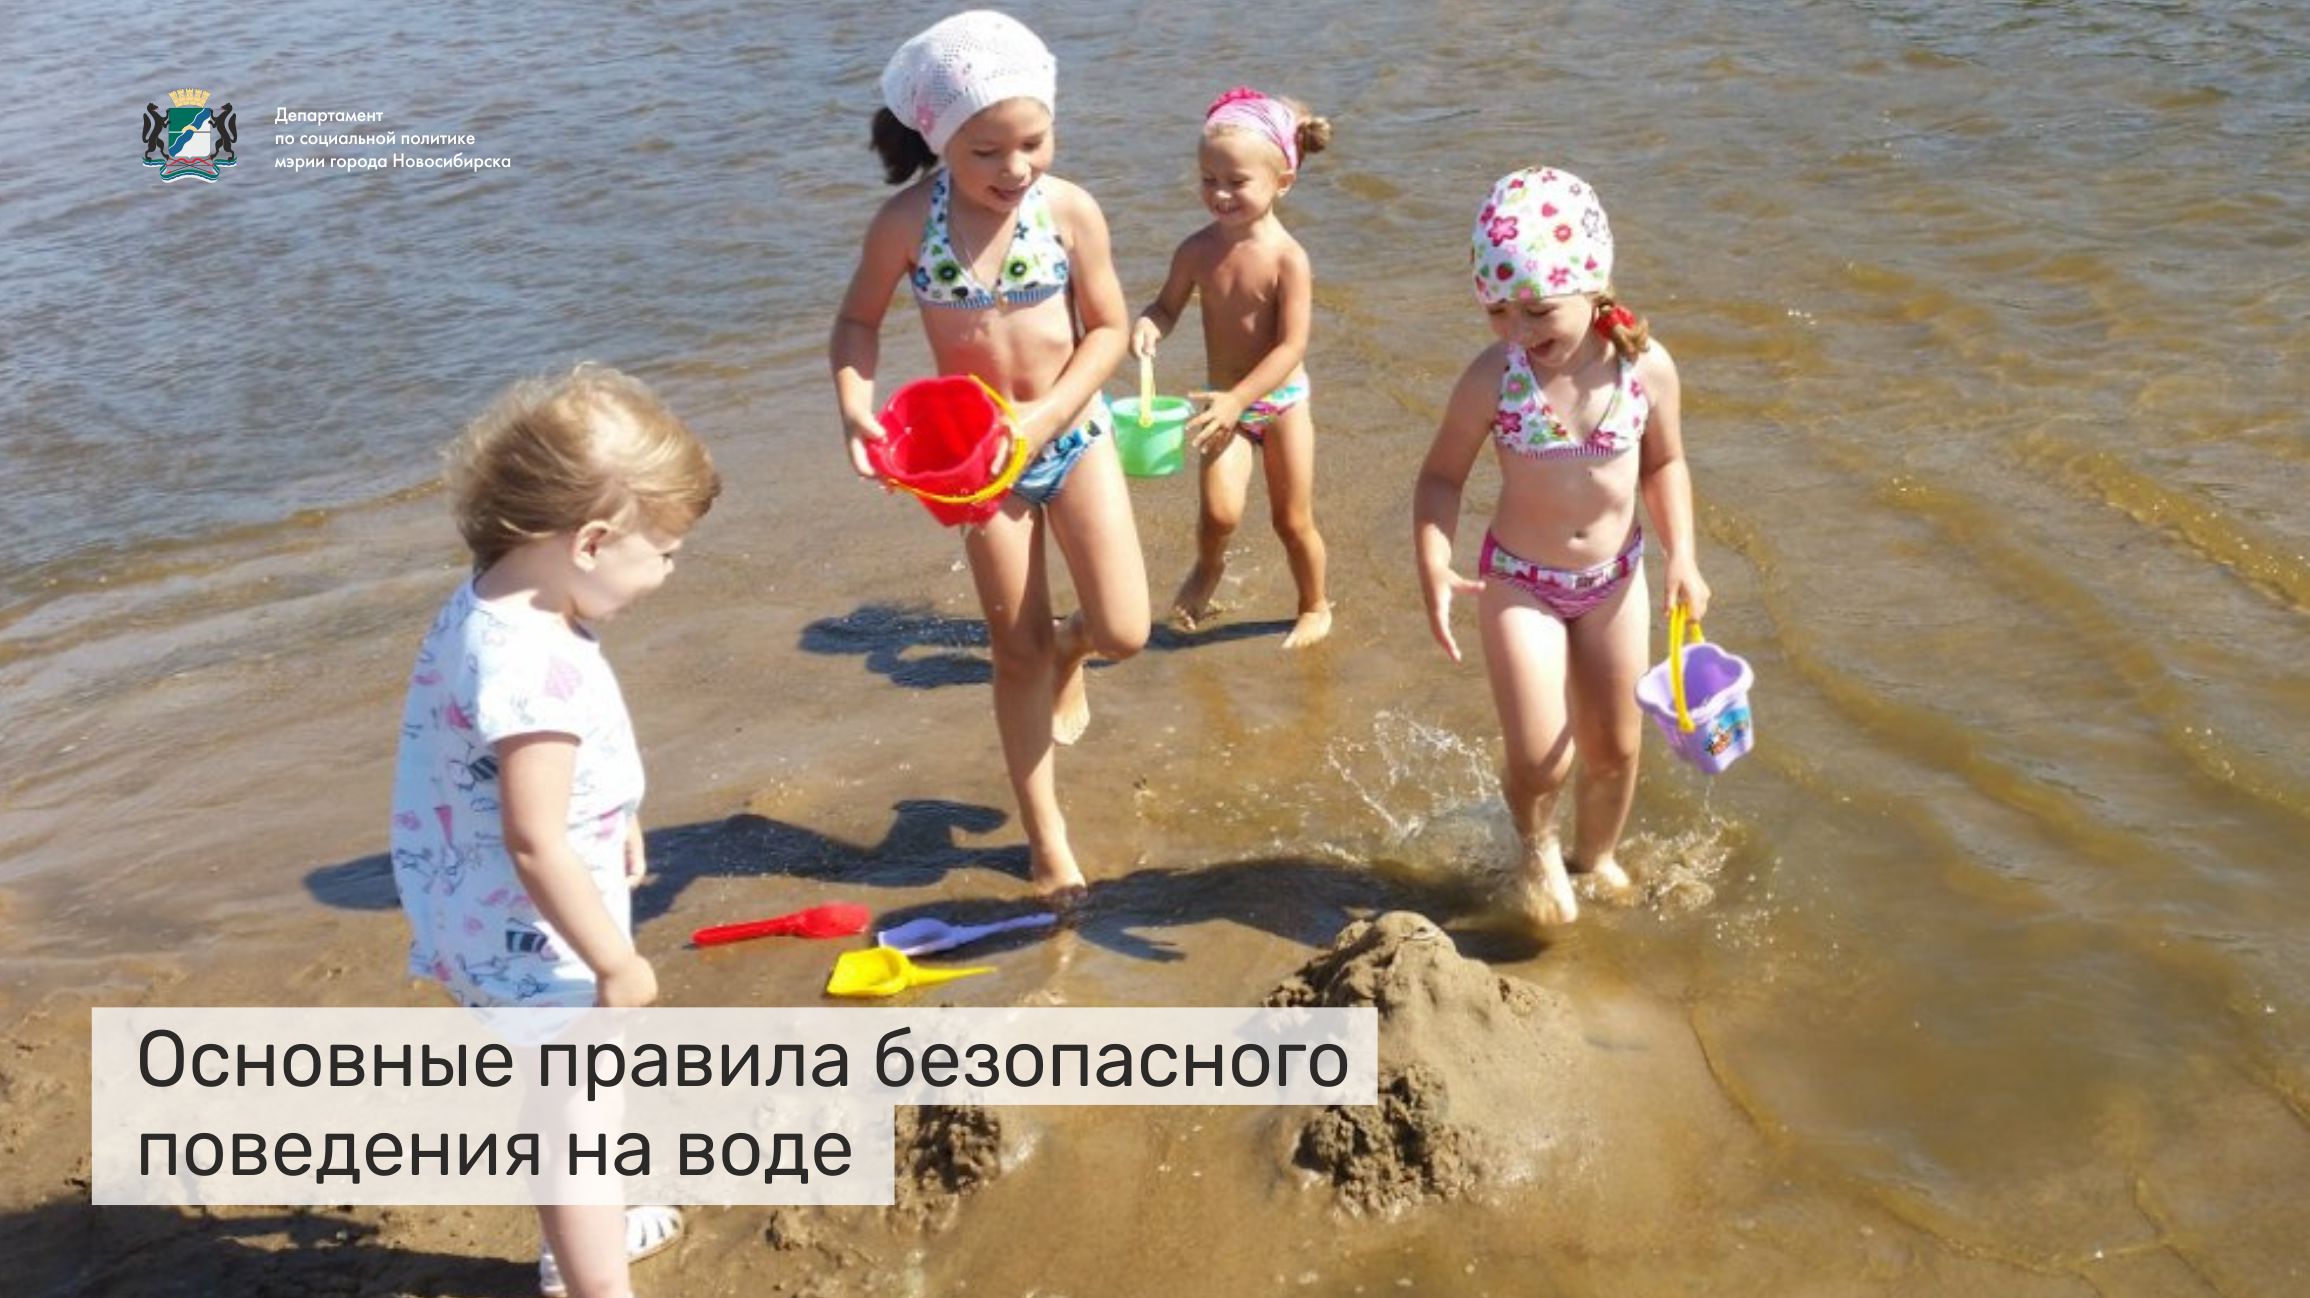 http://social.novo-sibirsk.ru/commission/DocLib5/Безопасность на воде.jpg